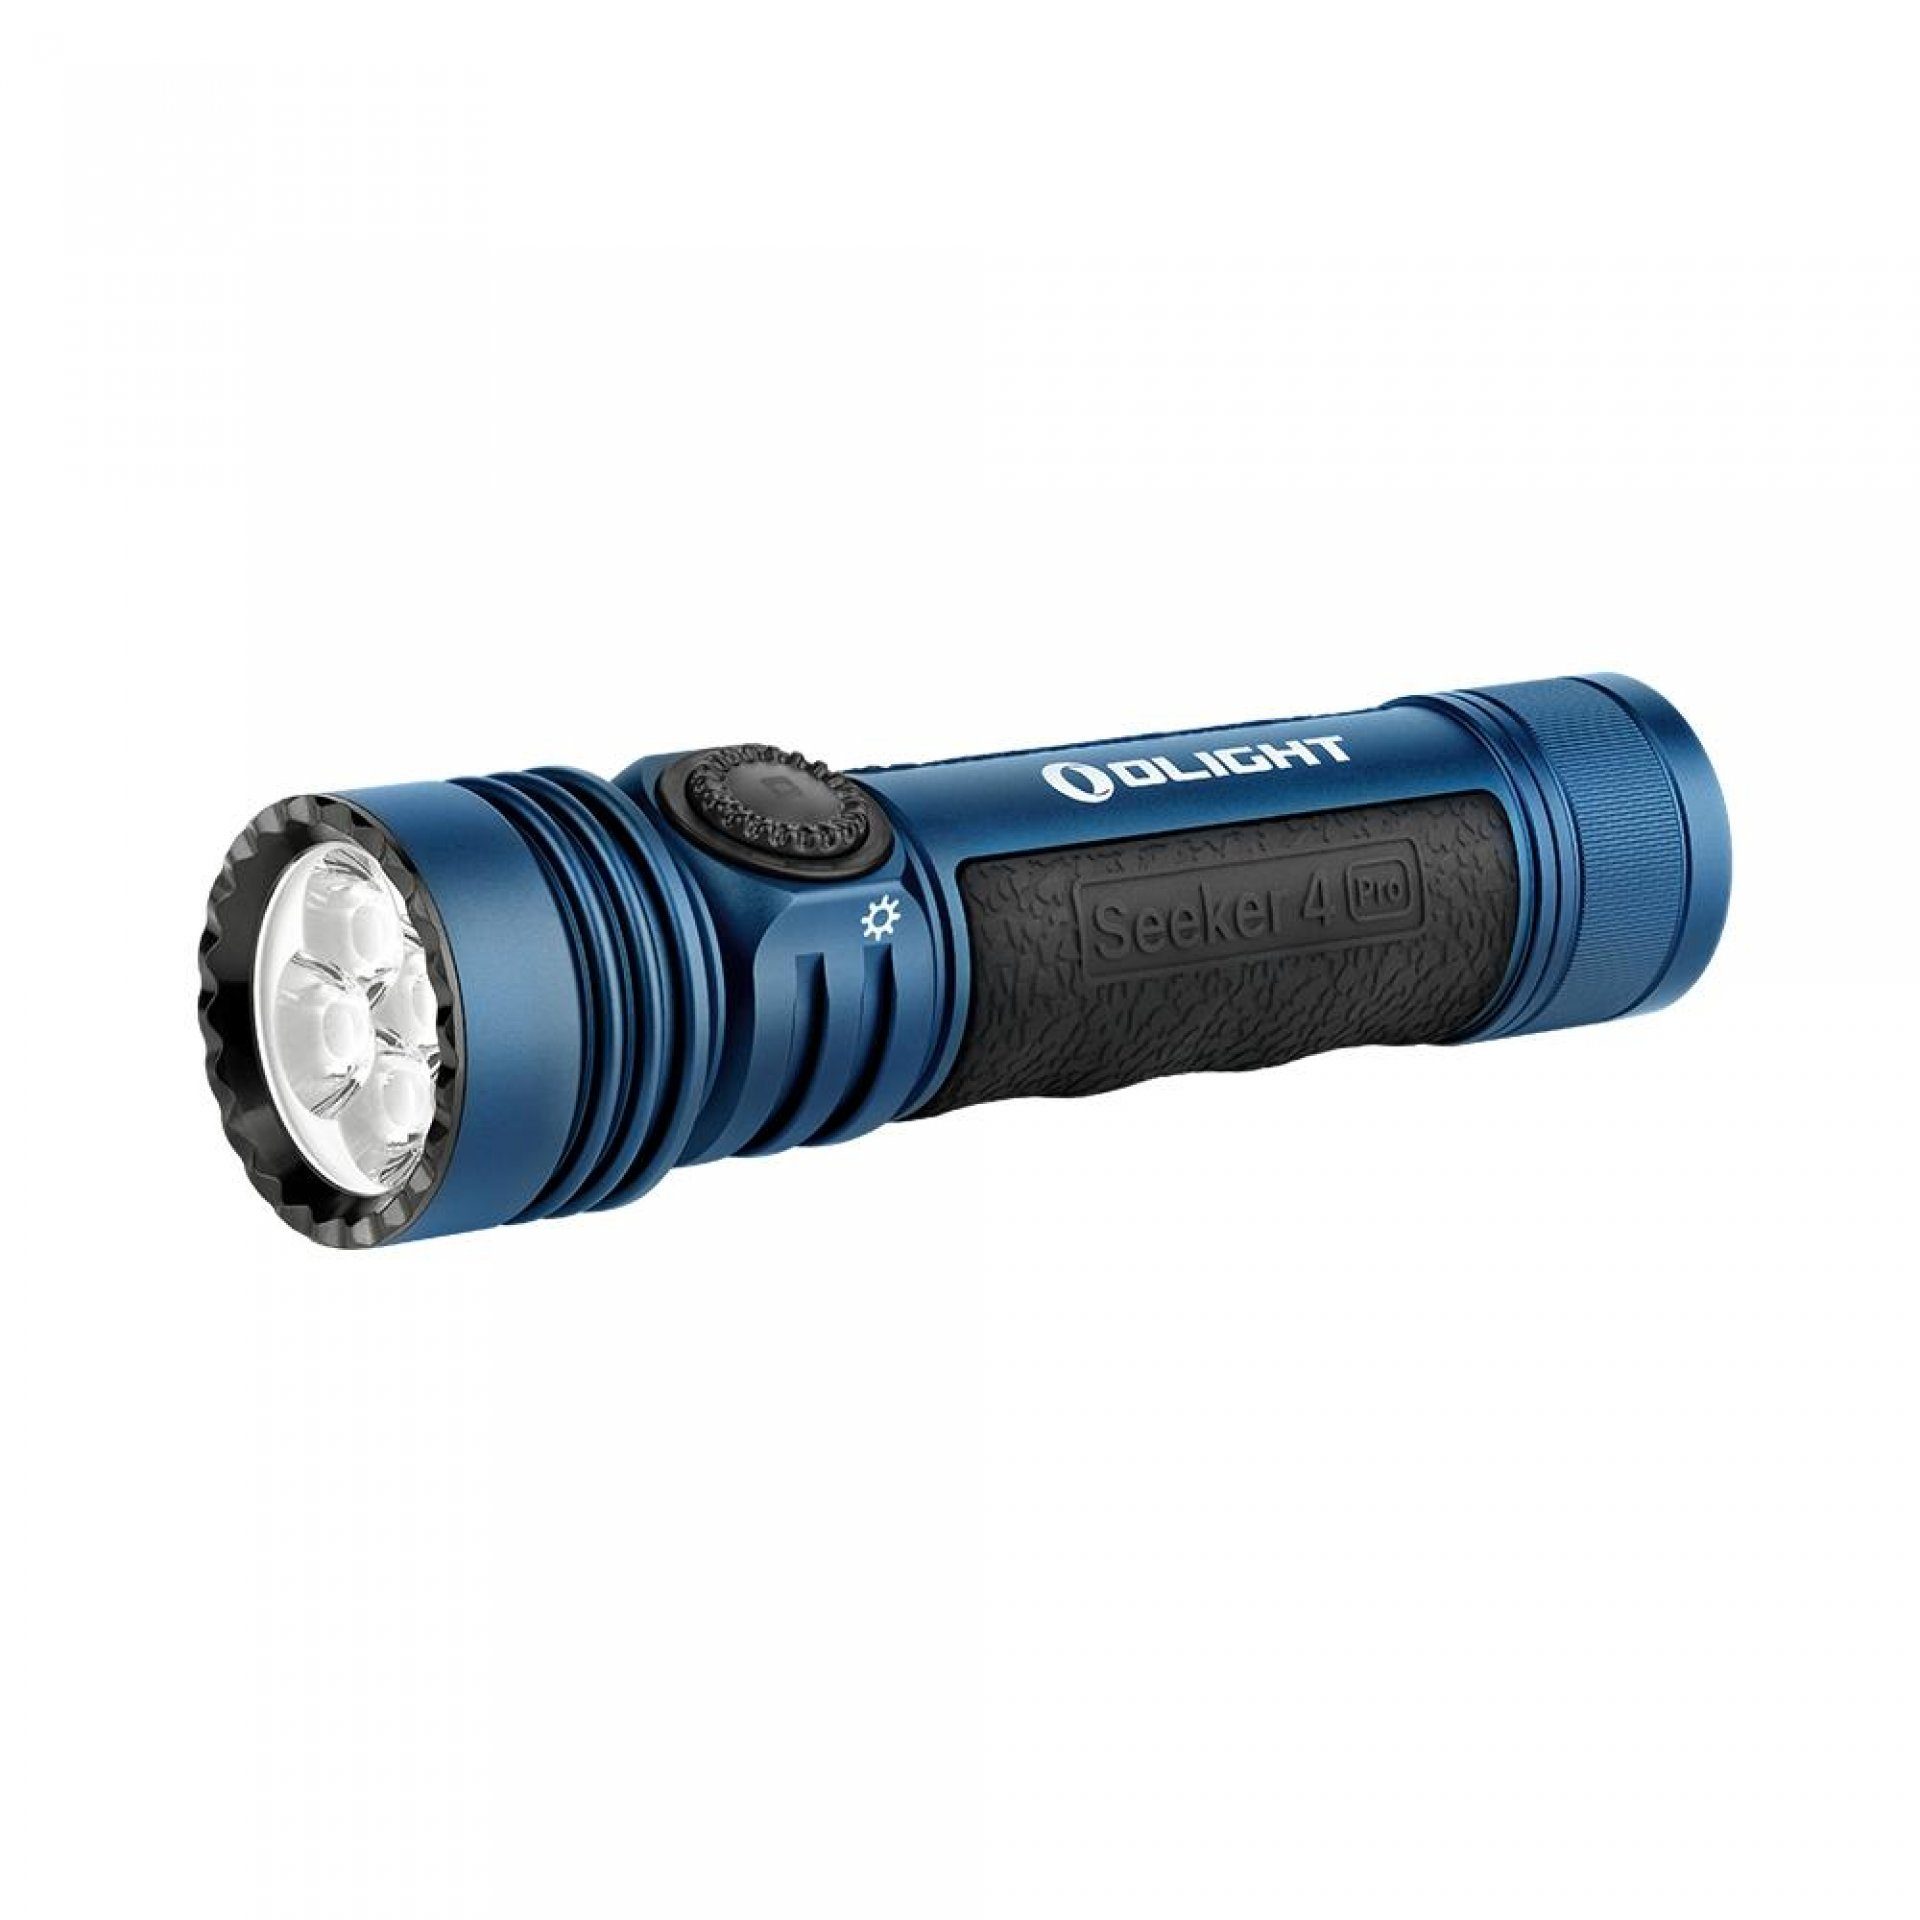 Lumen Pro Taschenlampe Meter 4600 OLIGHT Taschenlampe Seeker Olight 4 Mitternachtsblau 260 LED